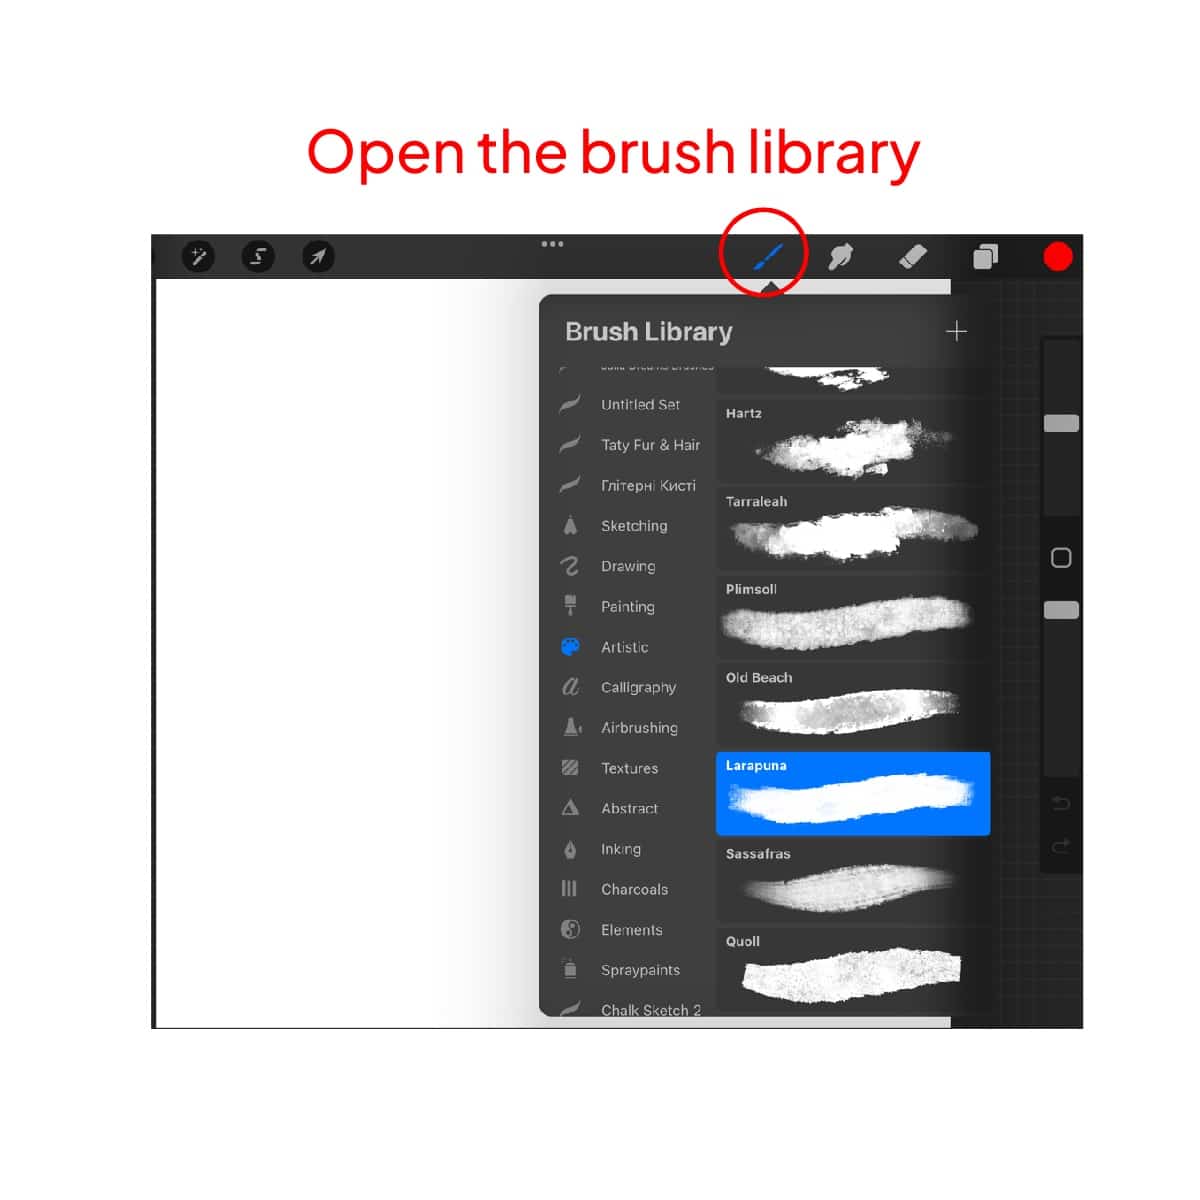 Brush library